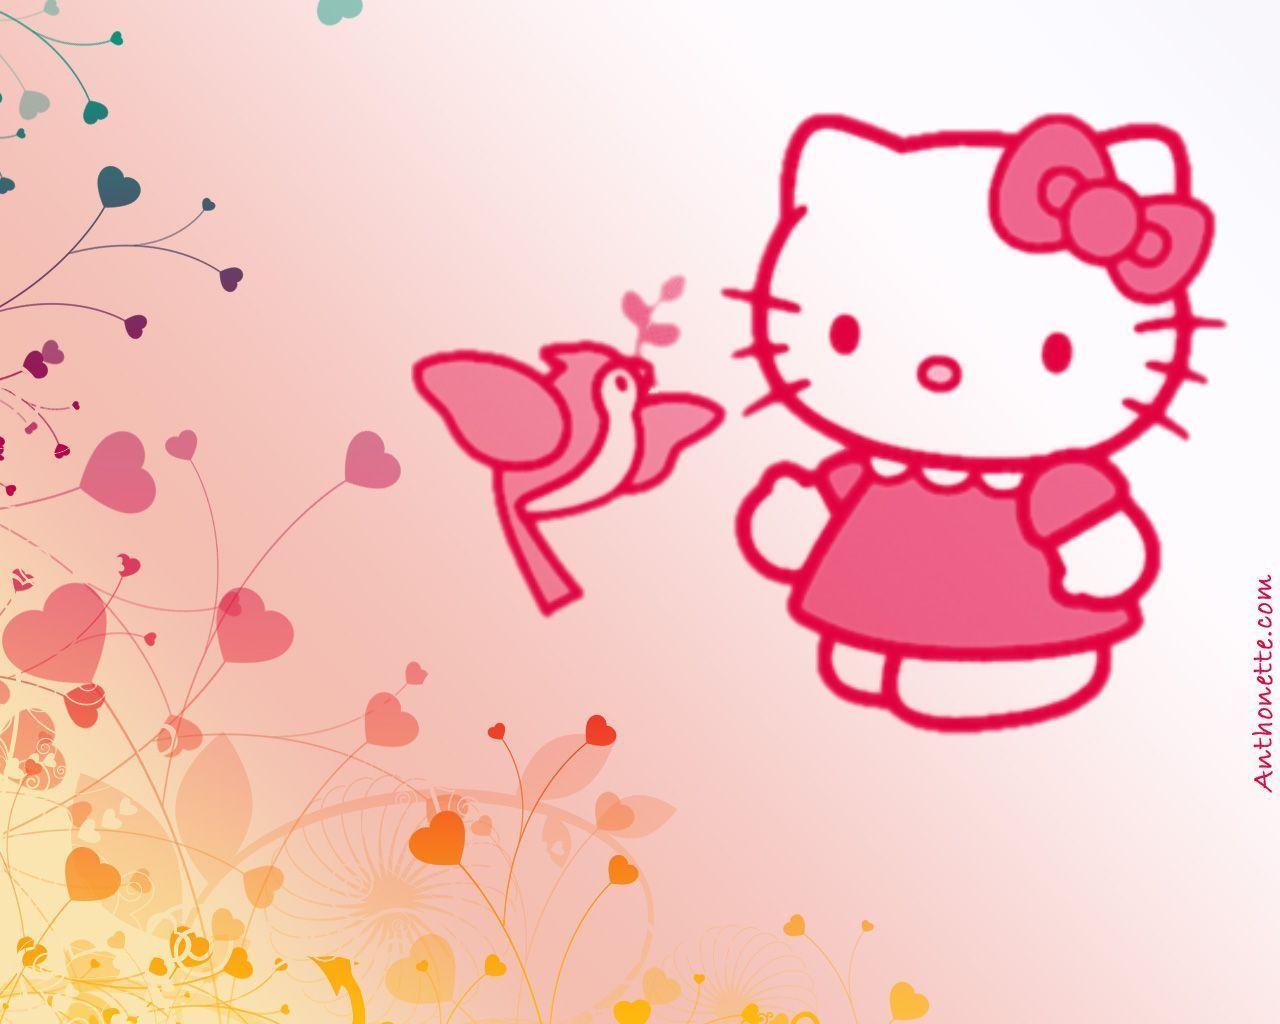 Hello Kitty Wallpaper. Hello Kitty Forever